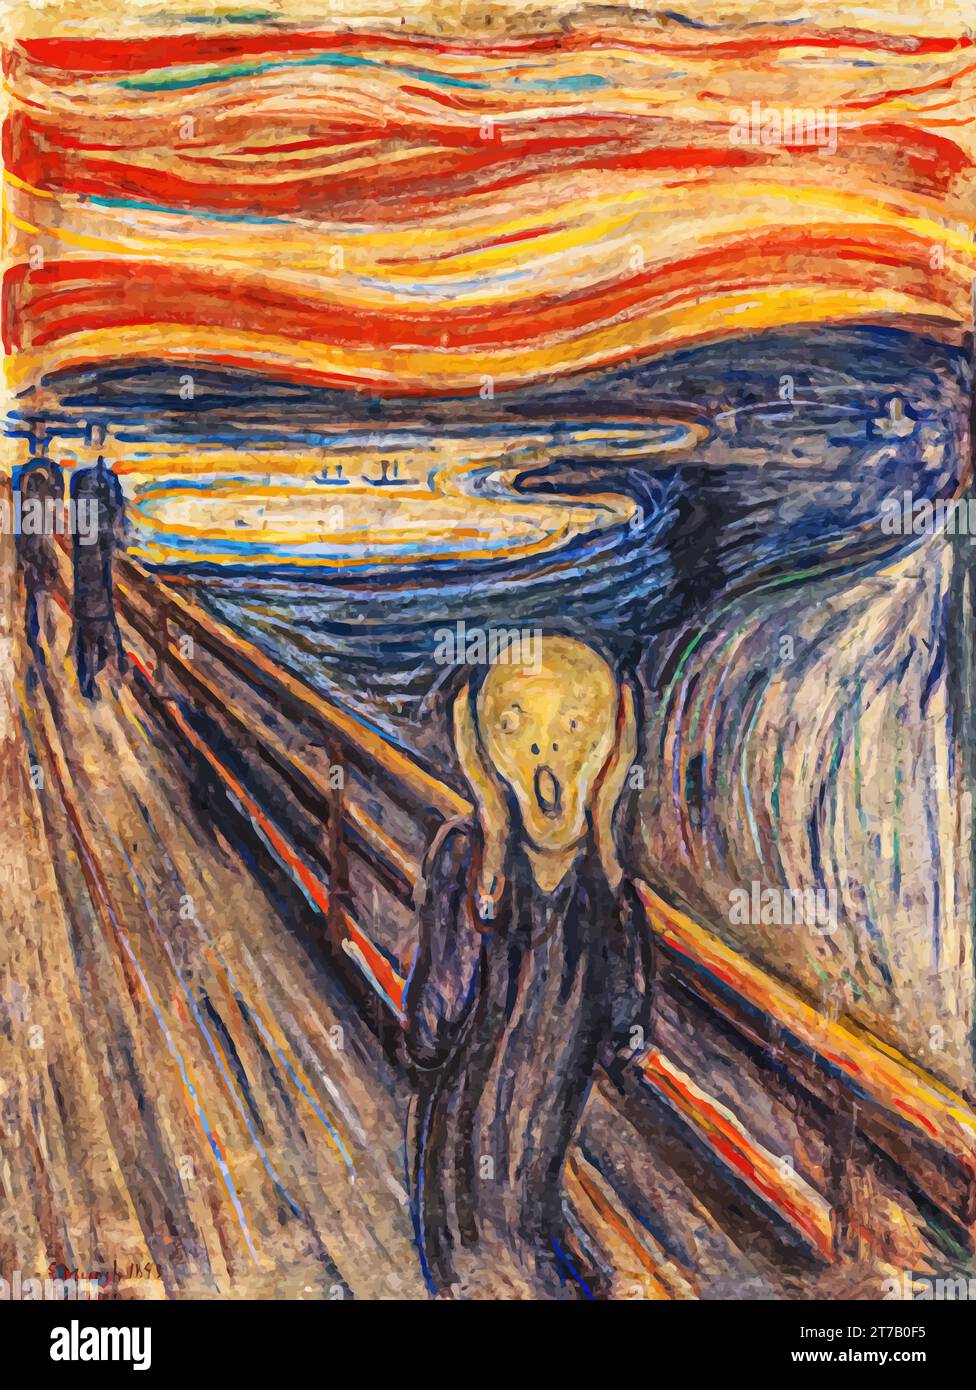 'The Scream' created by Norwegian artist Edvard Munch in 1893 Stock Vector